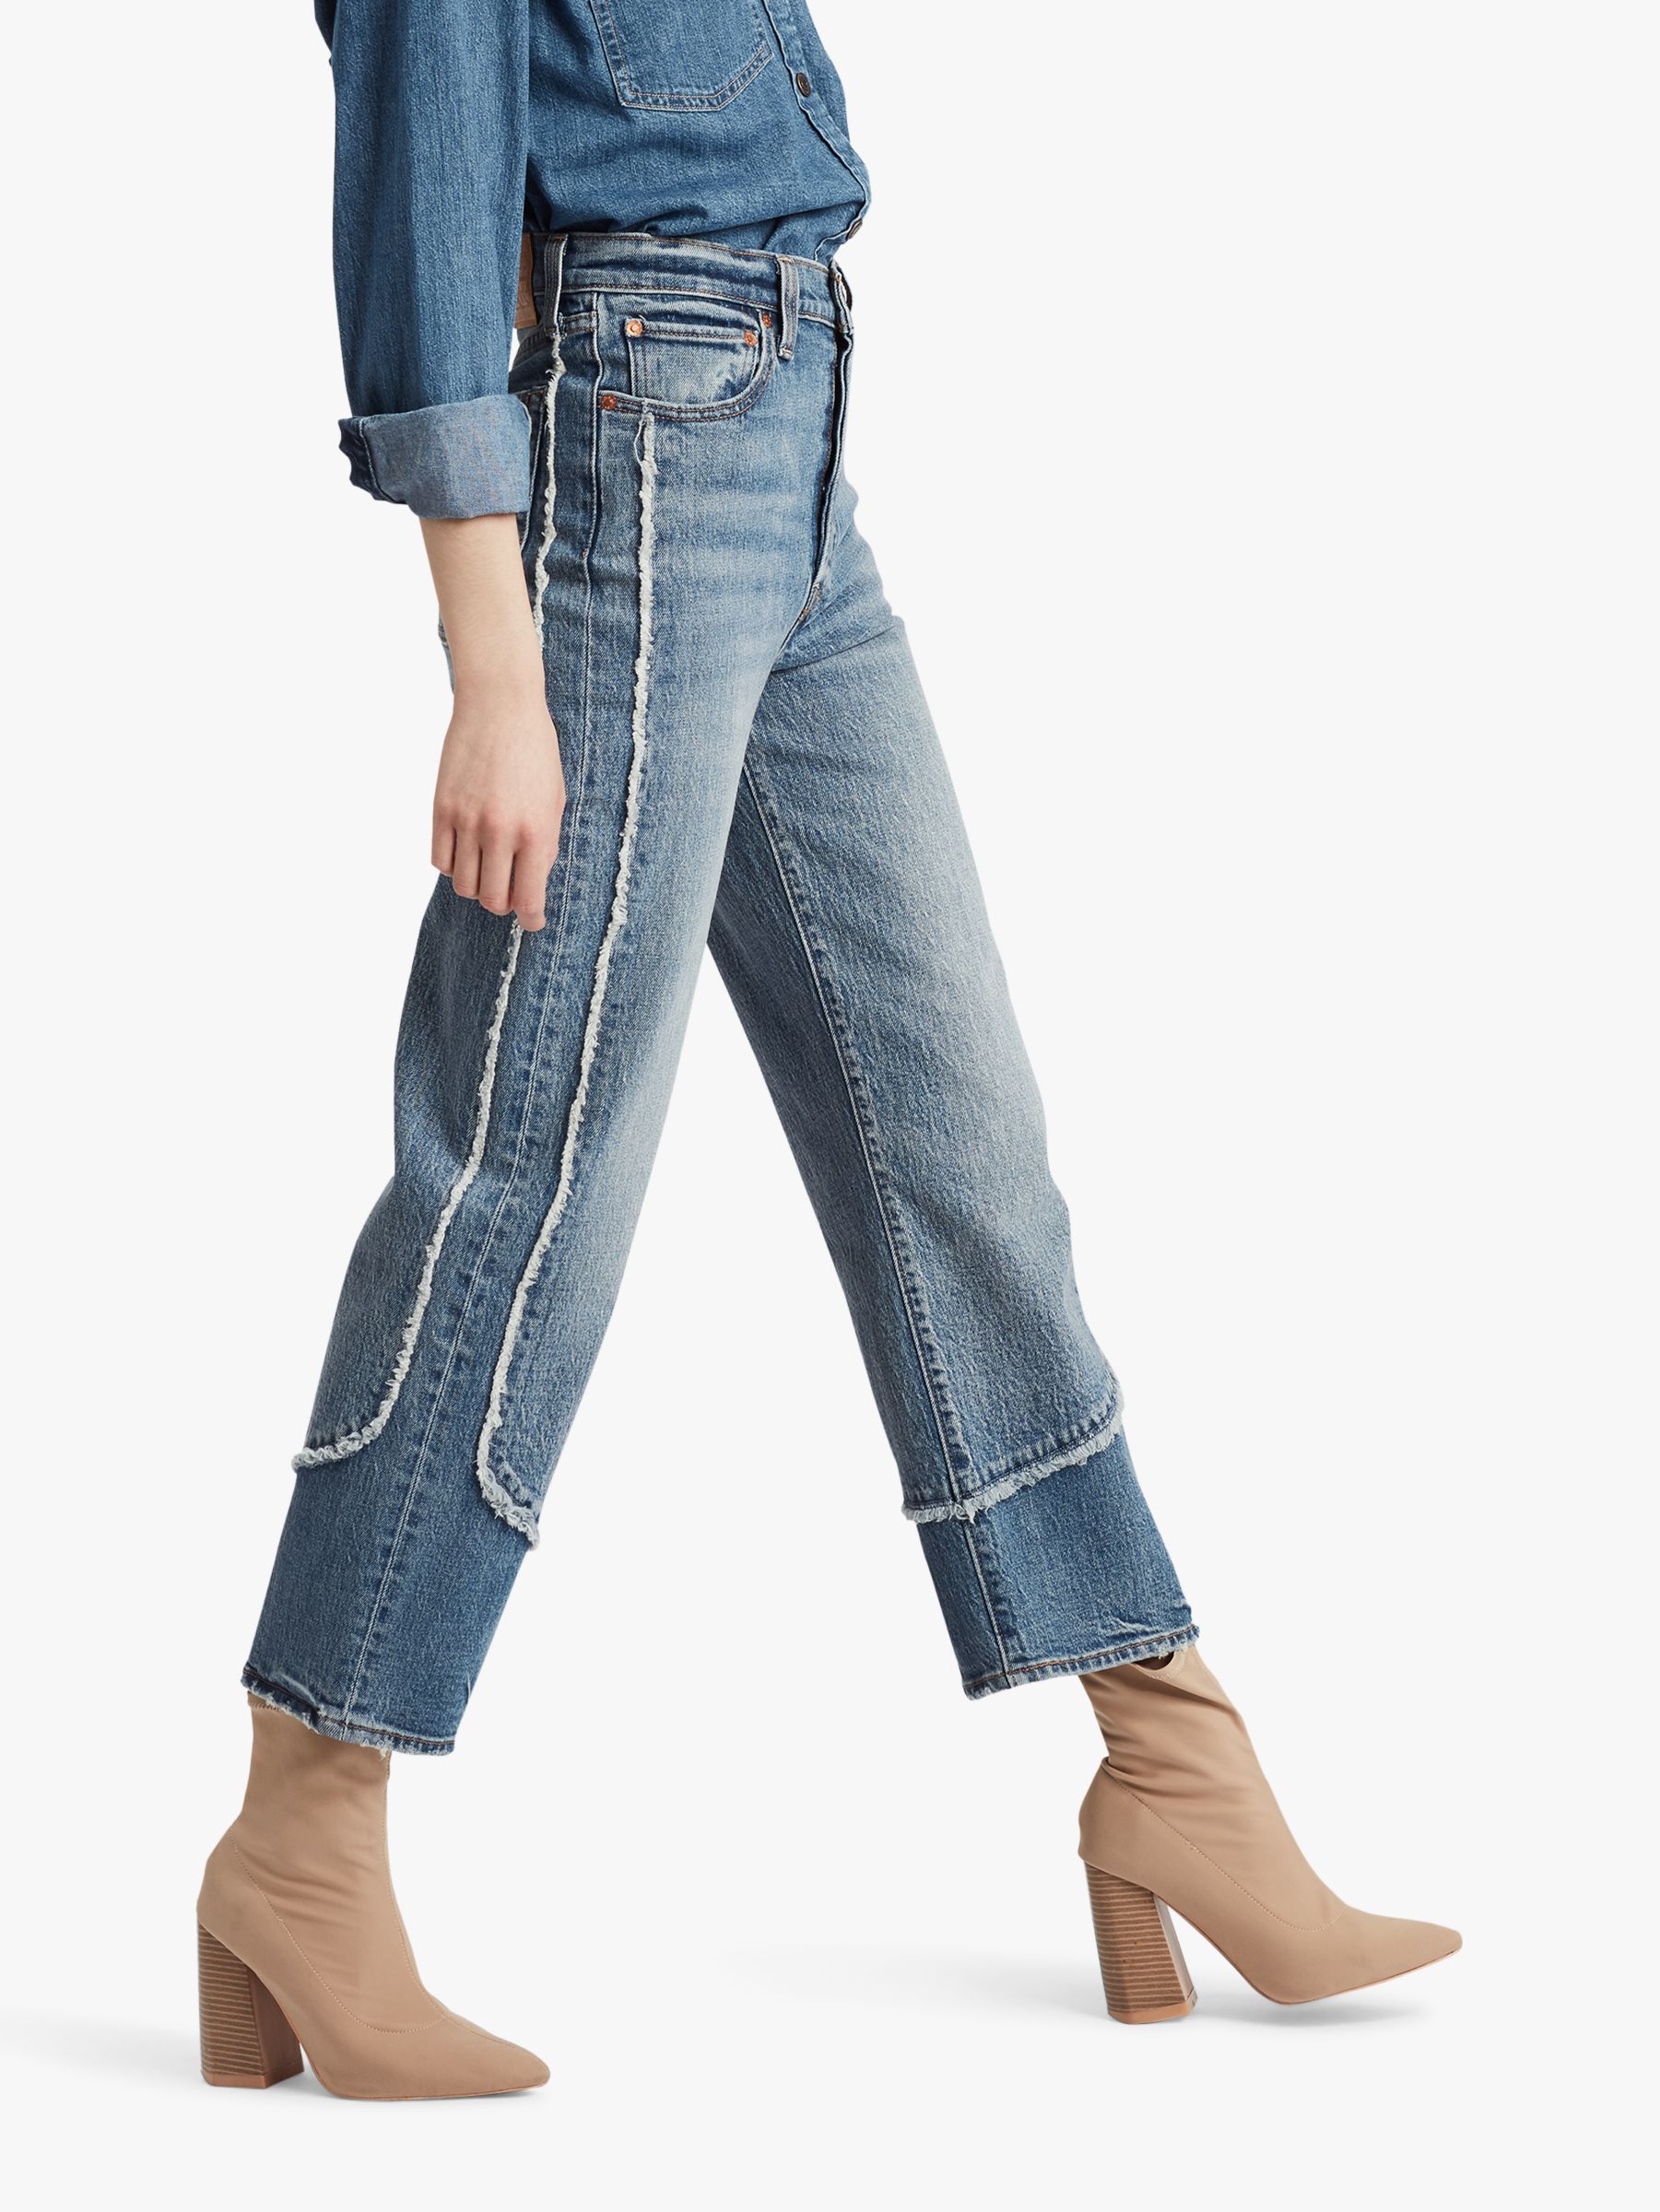 levi fringe jeans